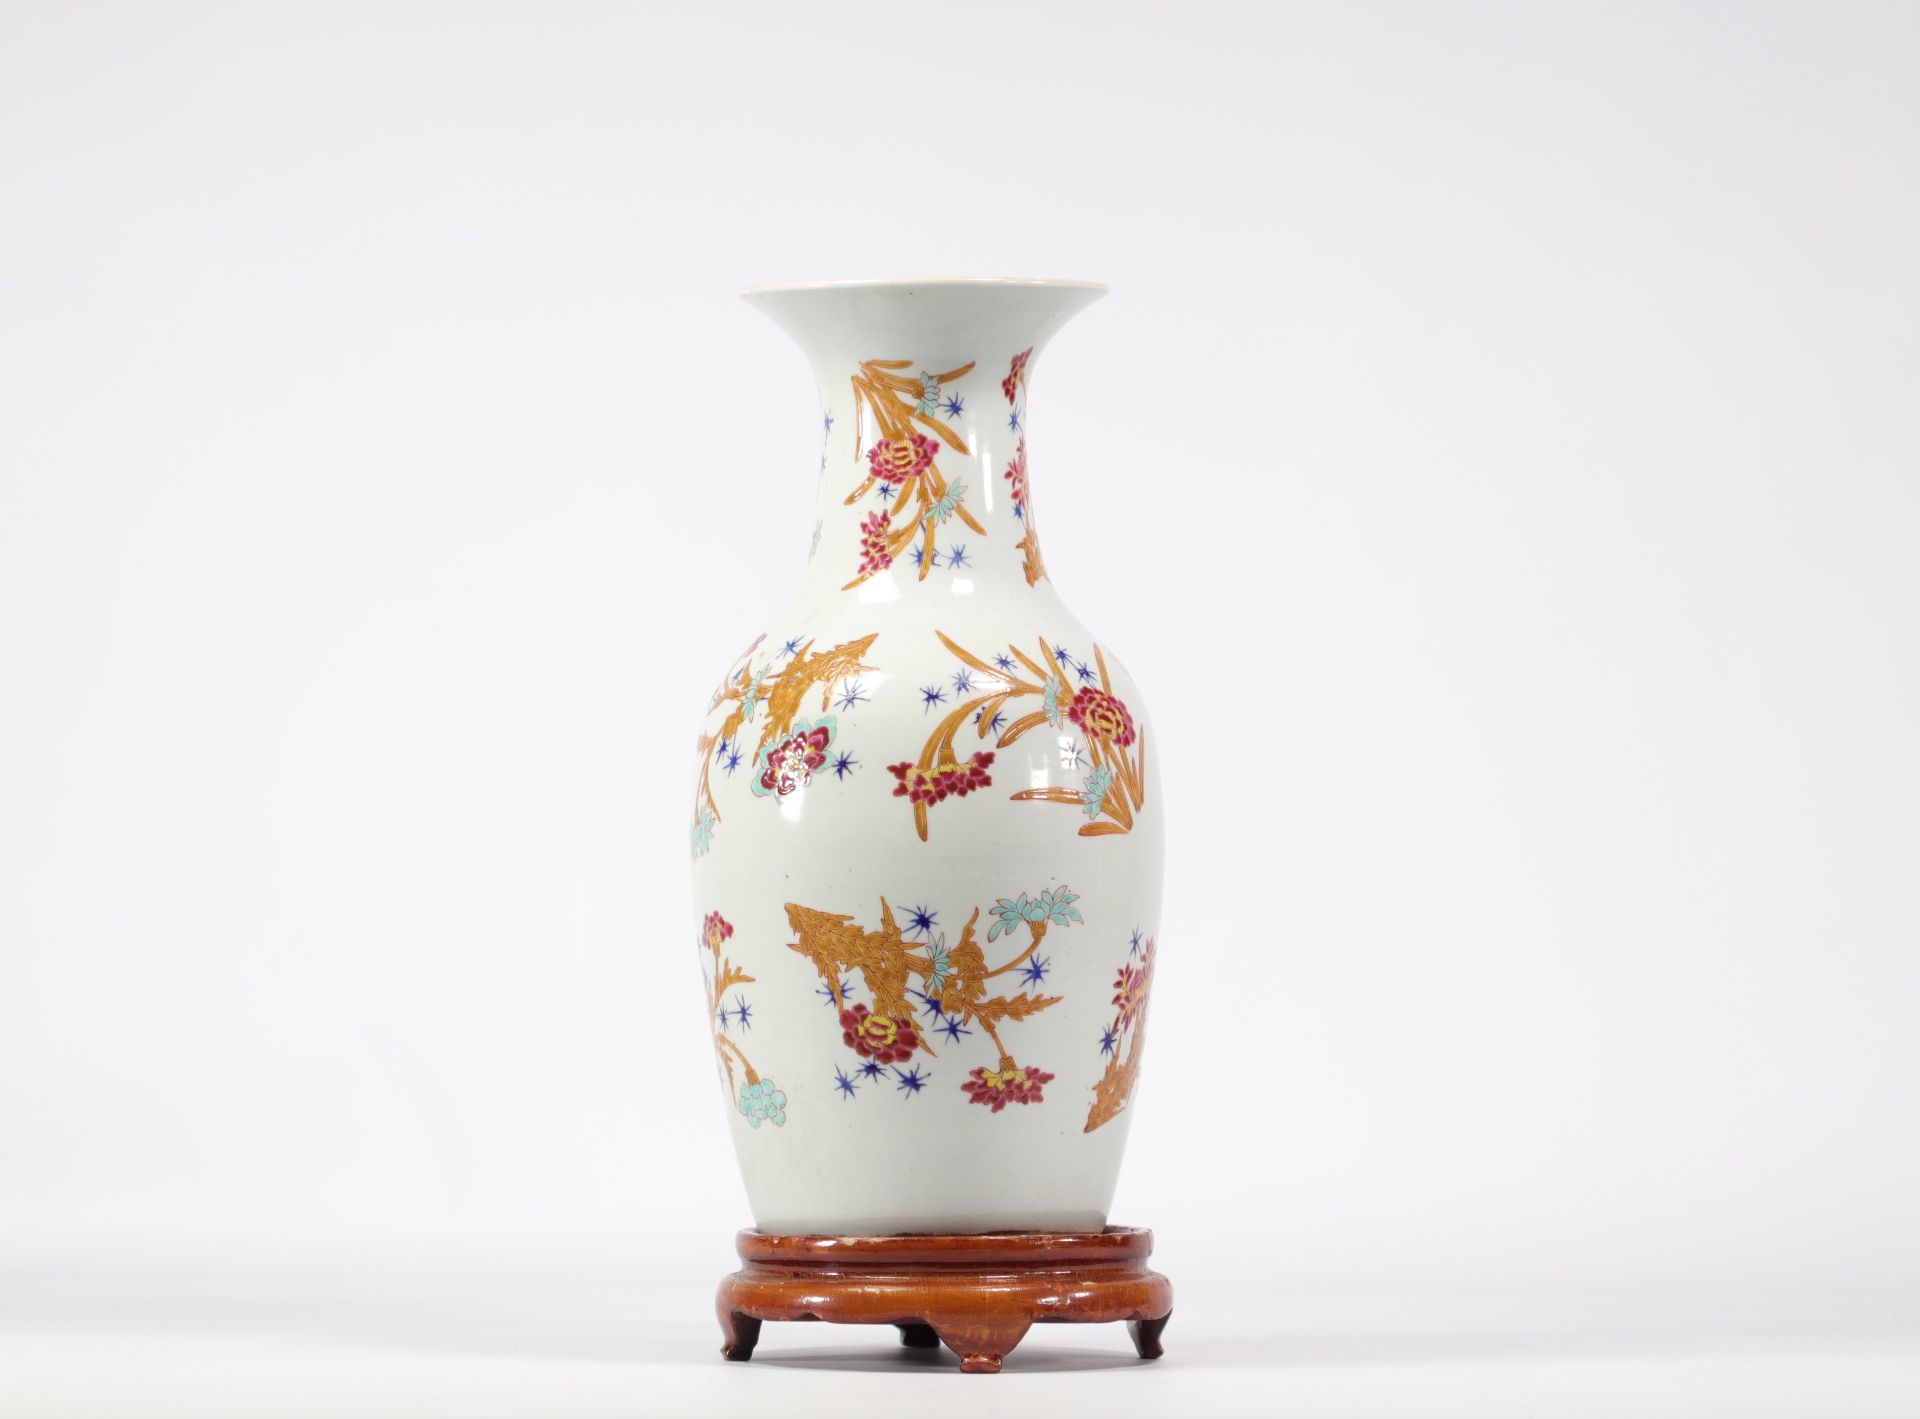 Famille rose porcelain vase with floral design on a white background - Image 2 of 3